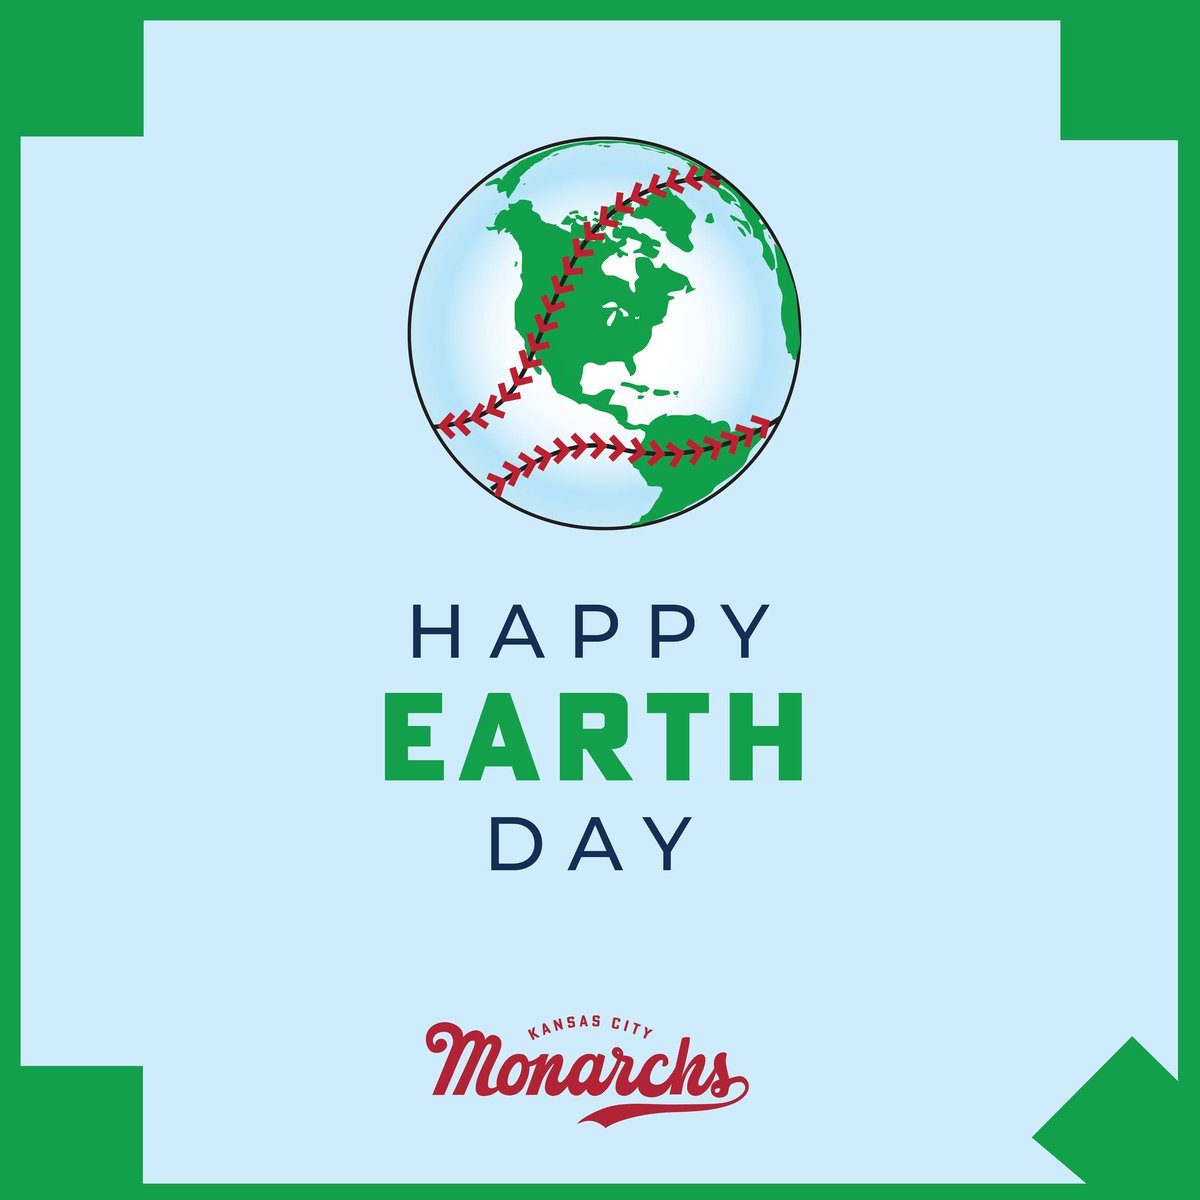 Because baseball makes the world go round. #NationalBaseballDay | #EarthDay